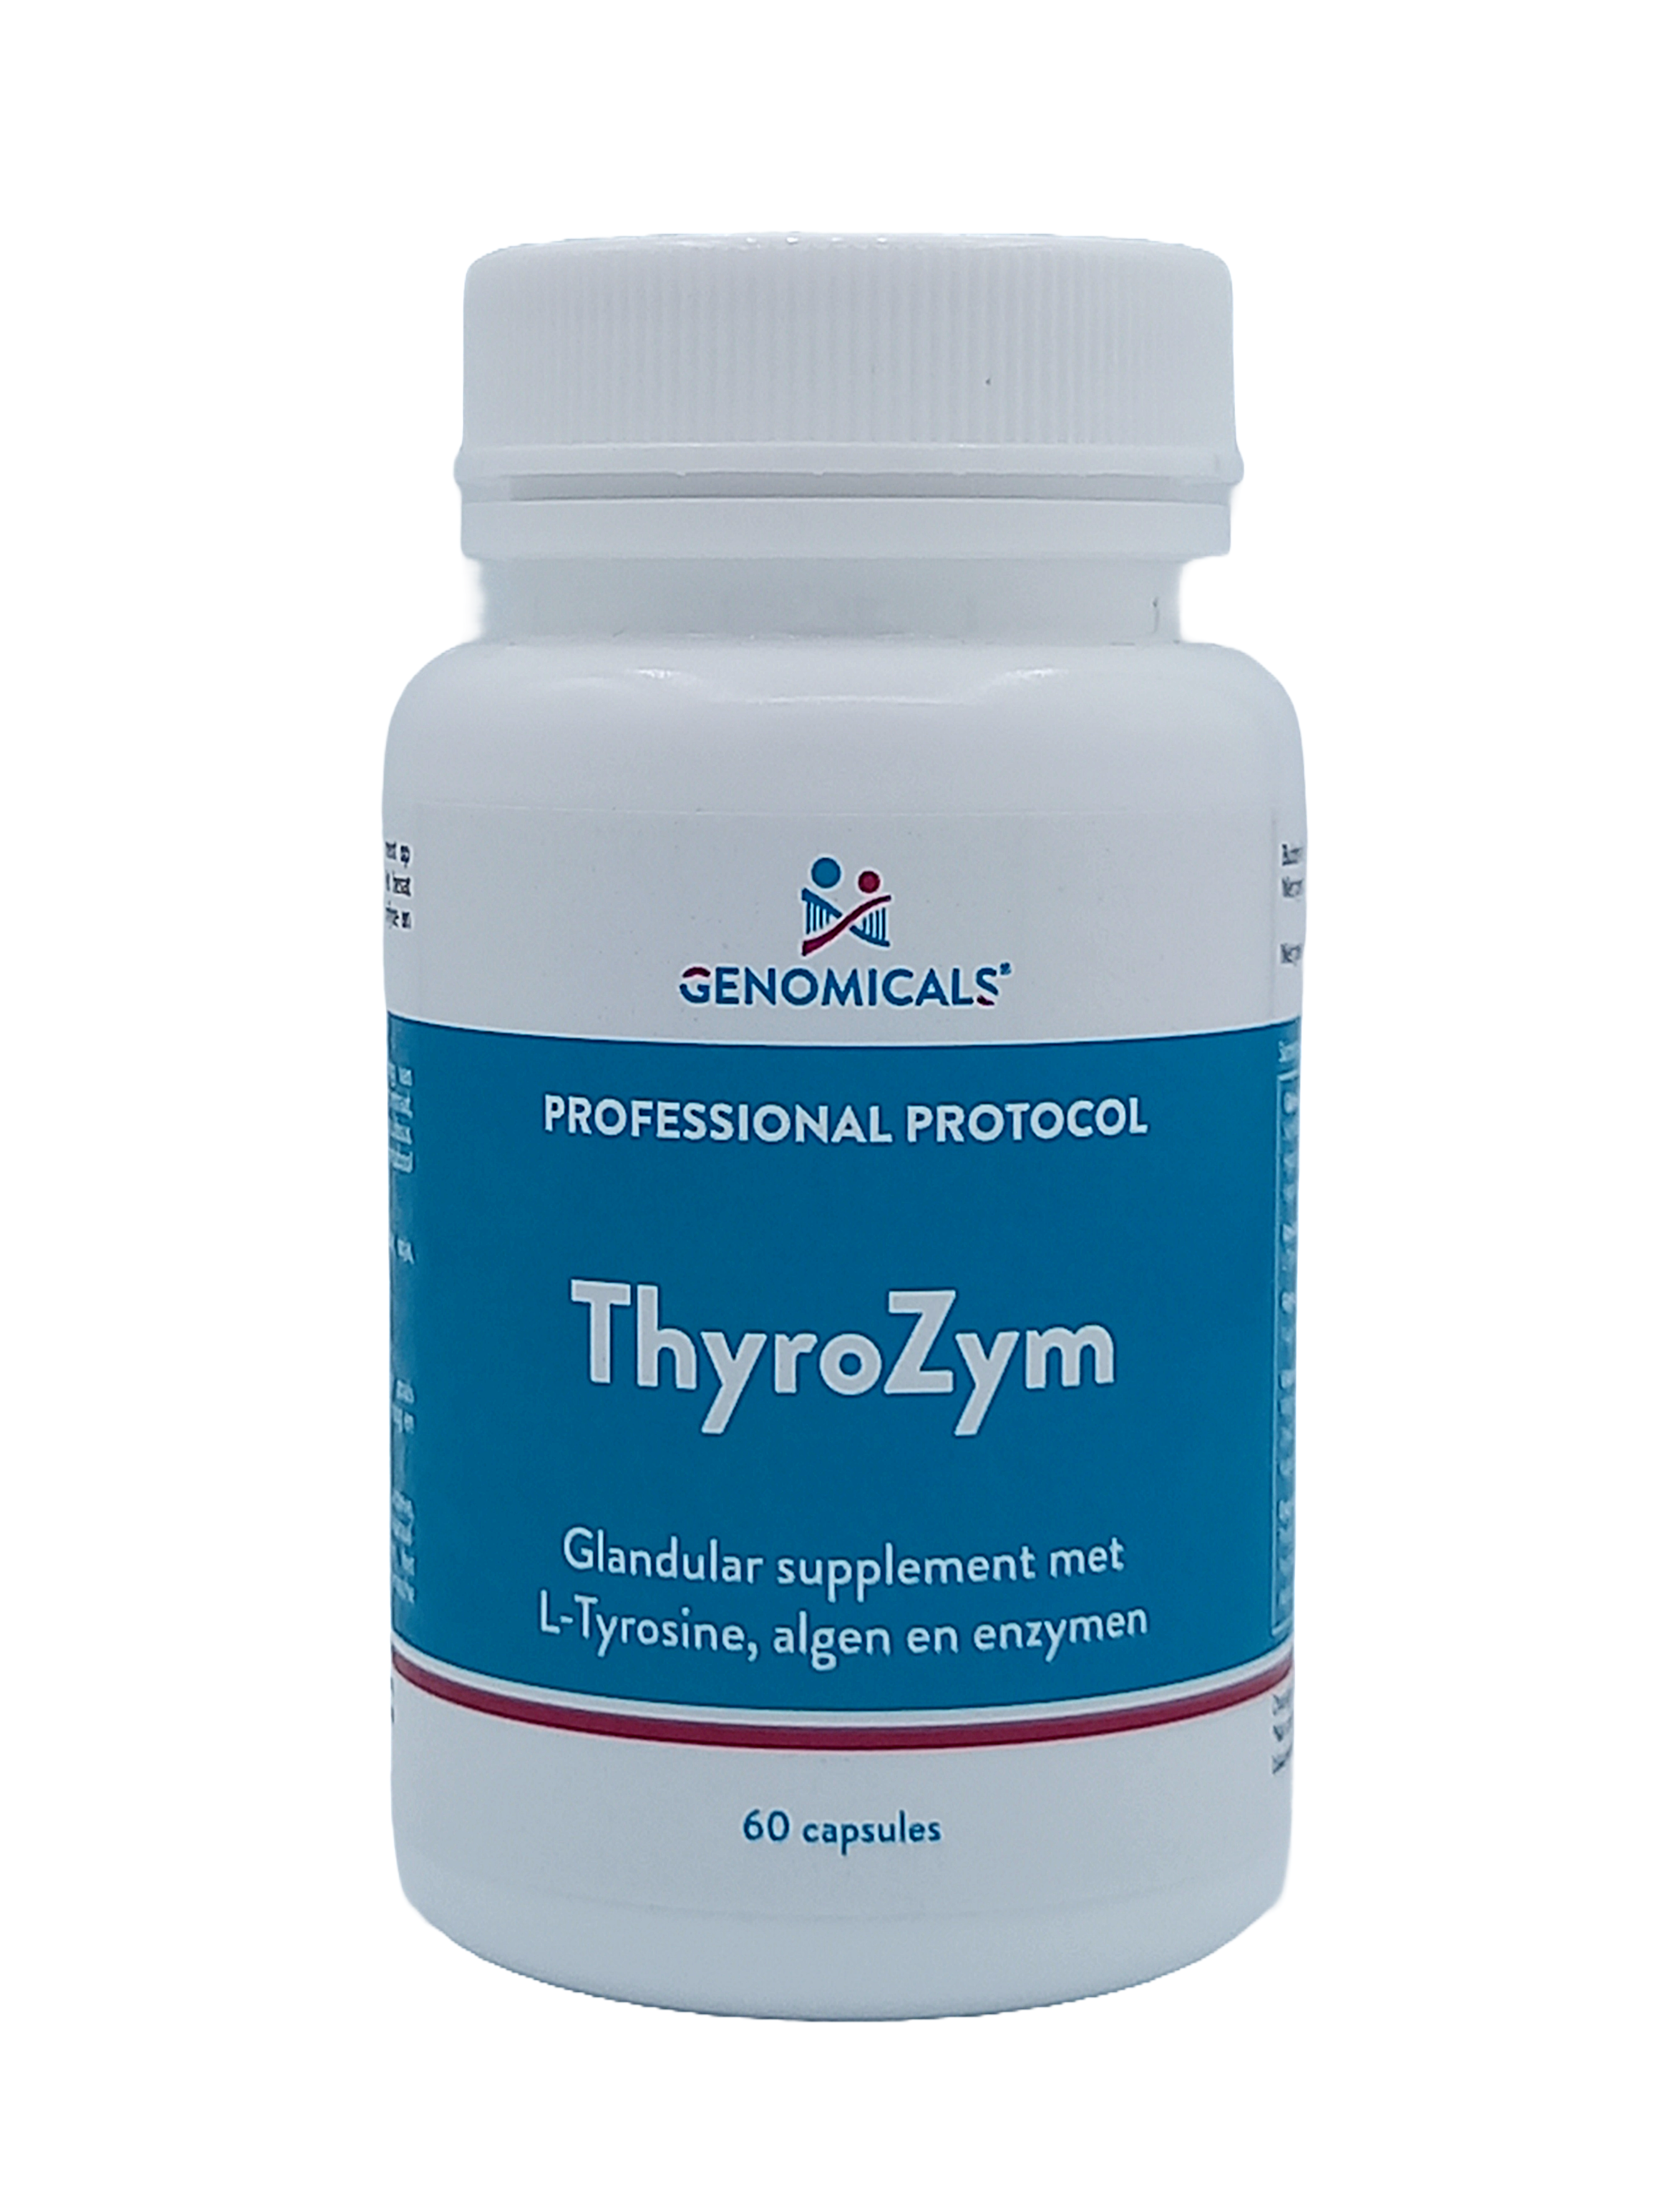 ThyroZym – 60 Vcaps